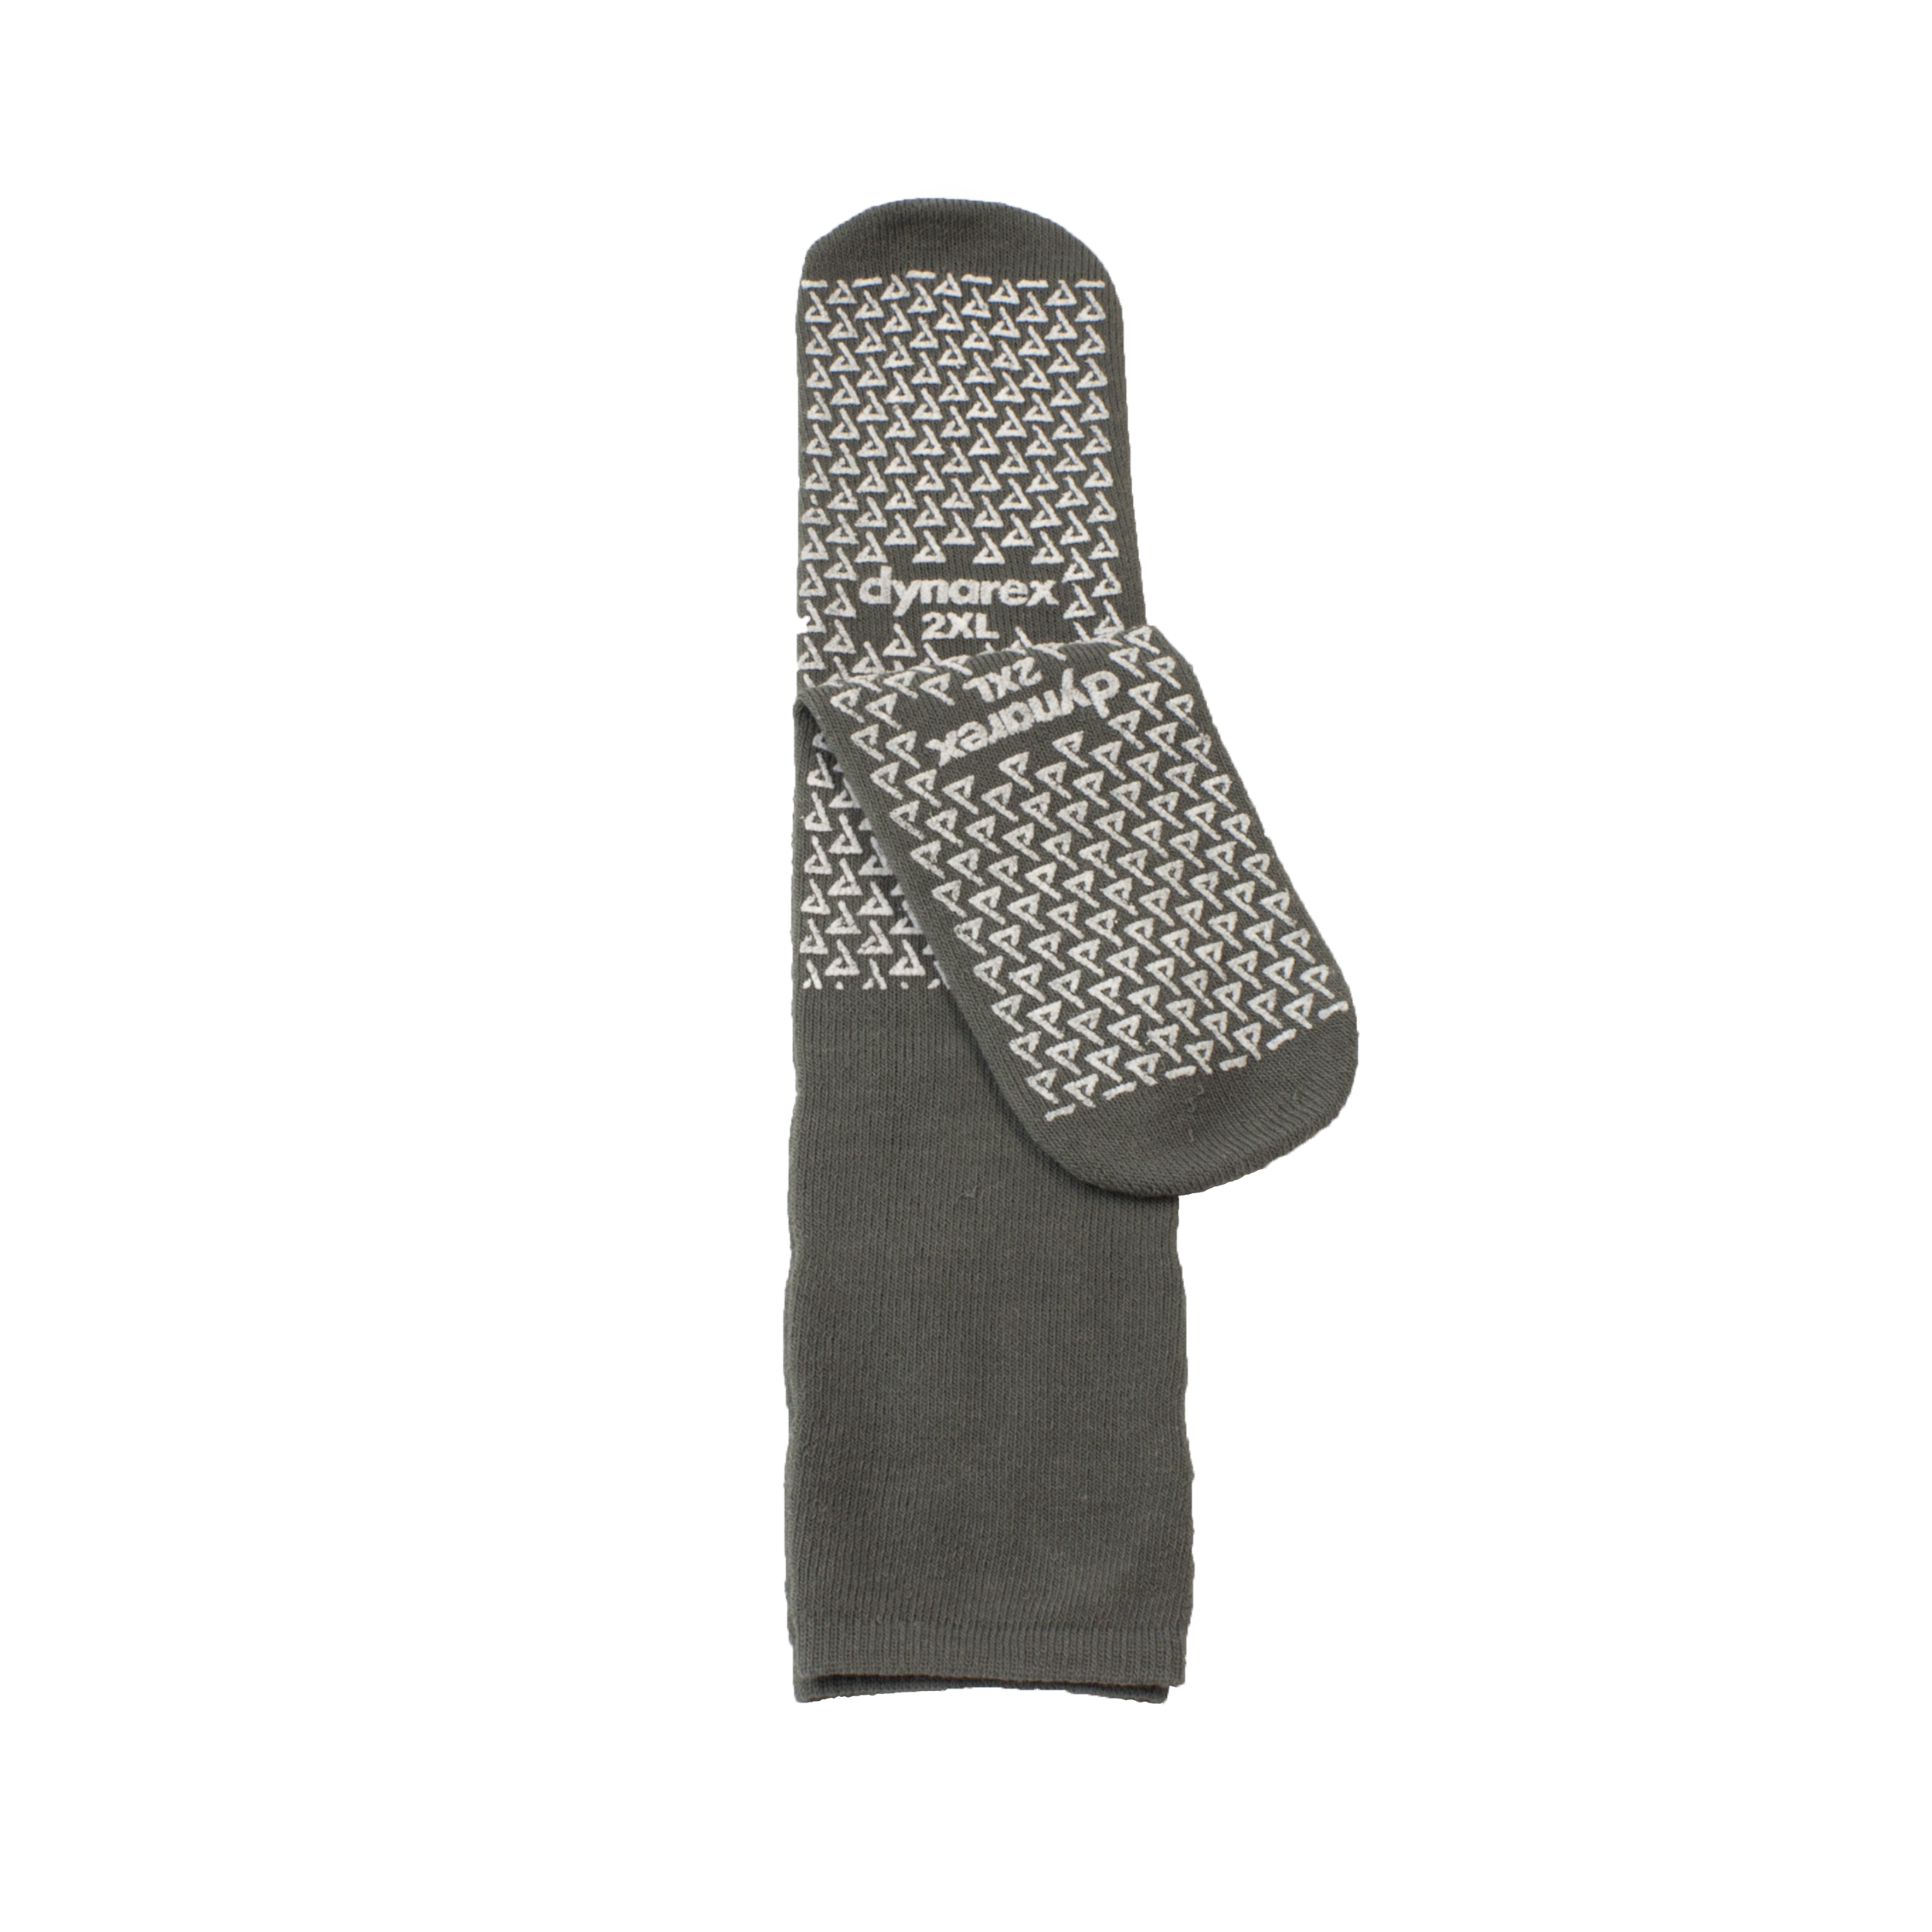 Double-Sided Slipper Socks - 2XL, Grey